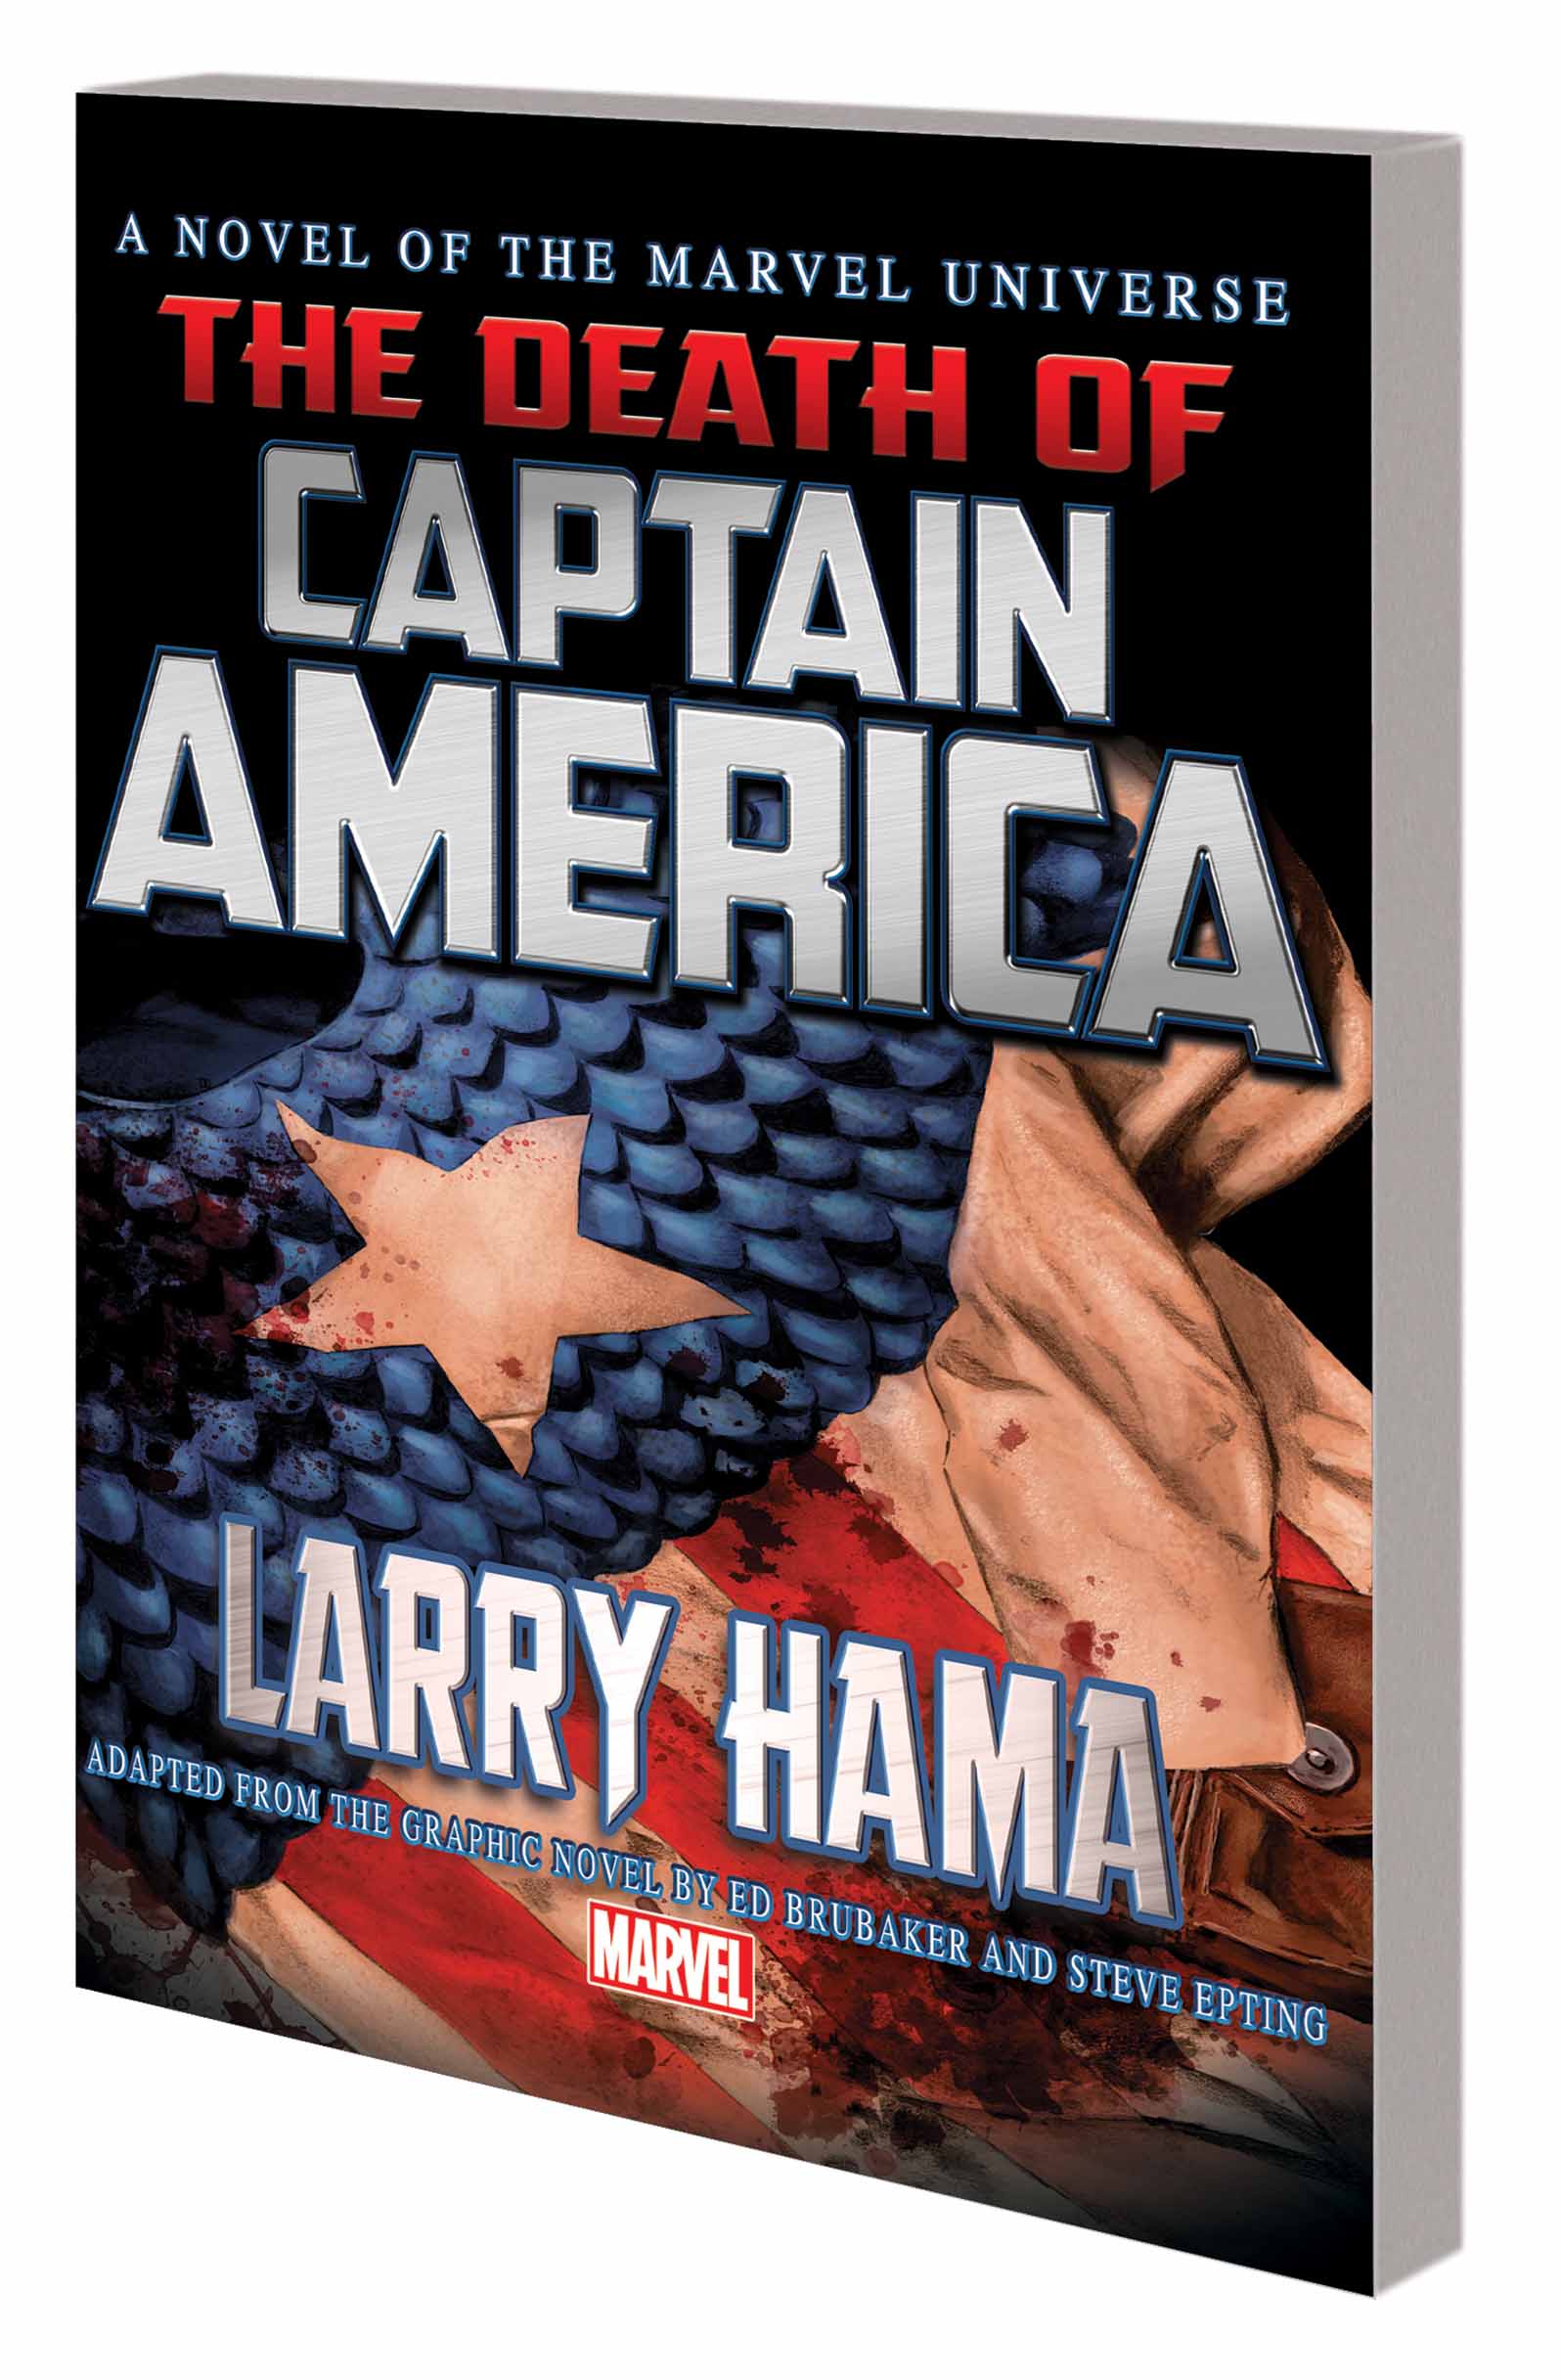 Captain America: The Death of Captain America Prose Novel (Trade Paperback)